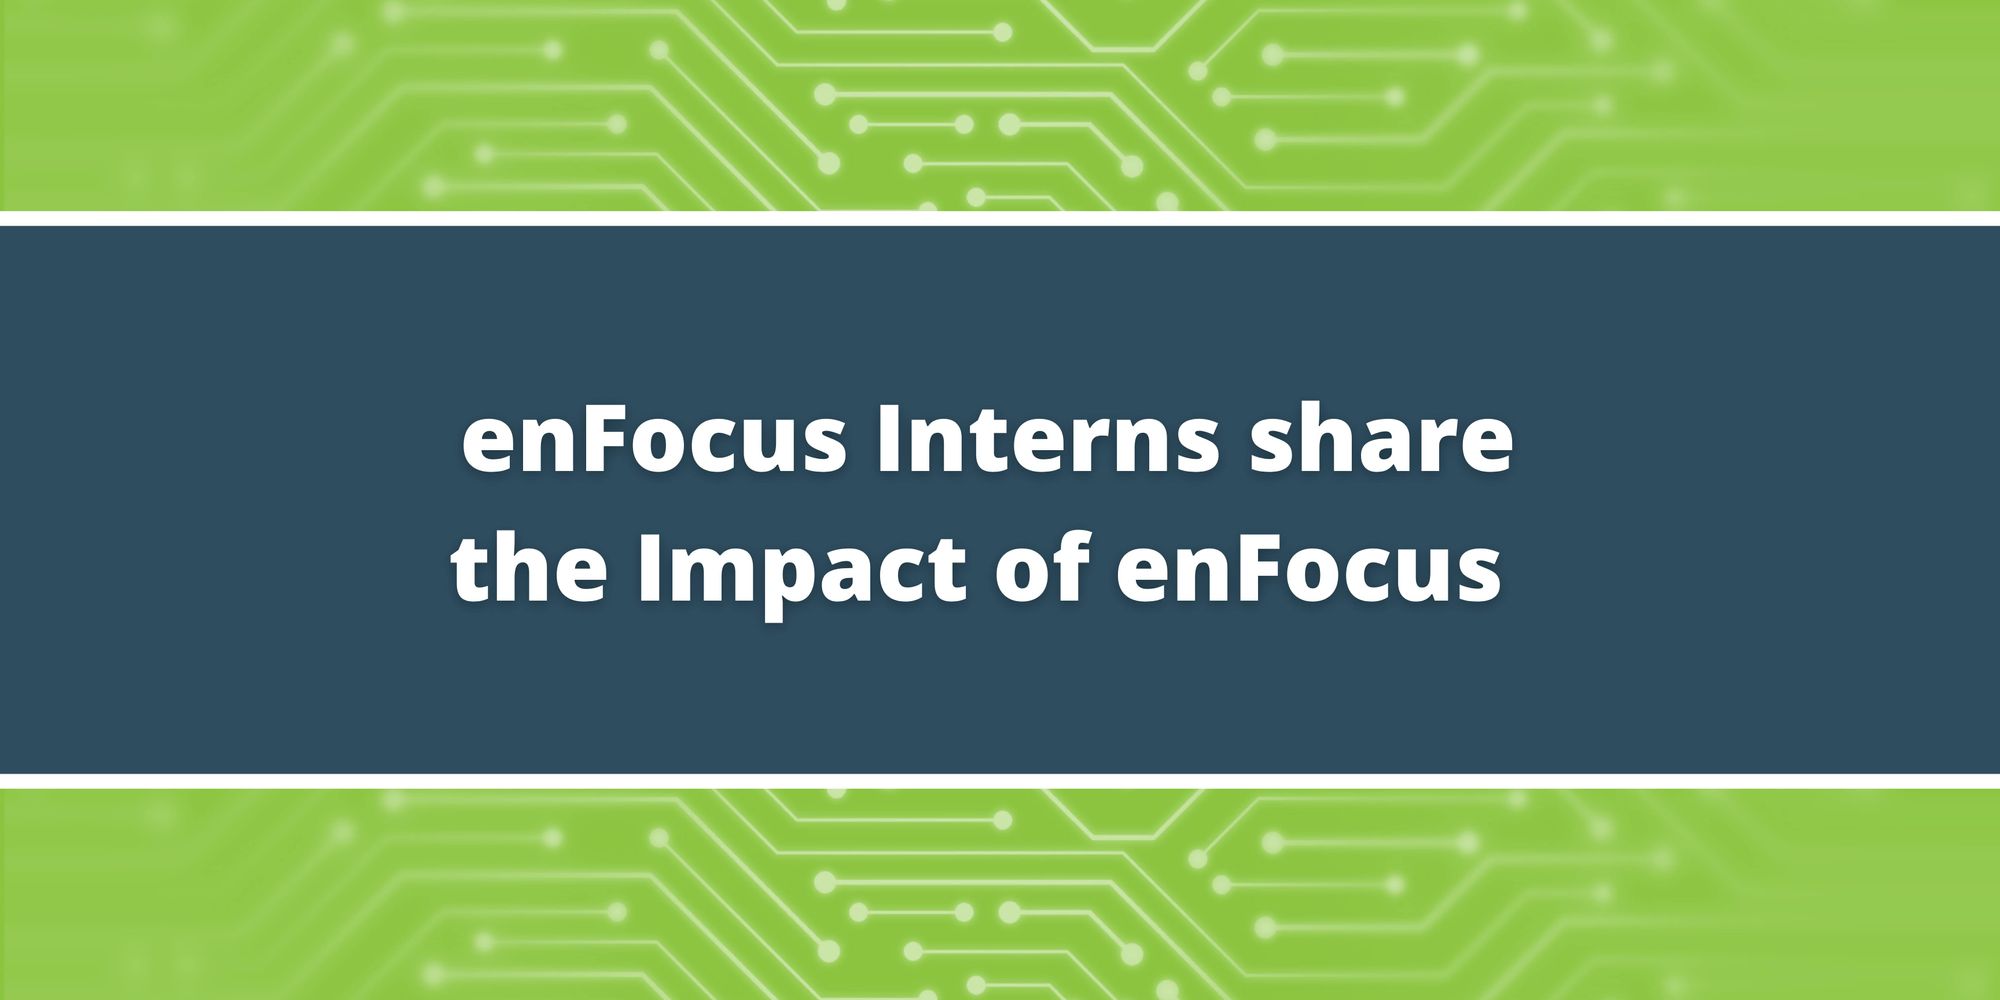 enFocus Interns share the Impact of enFocus